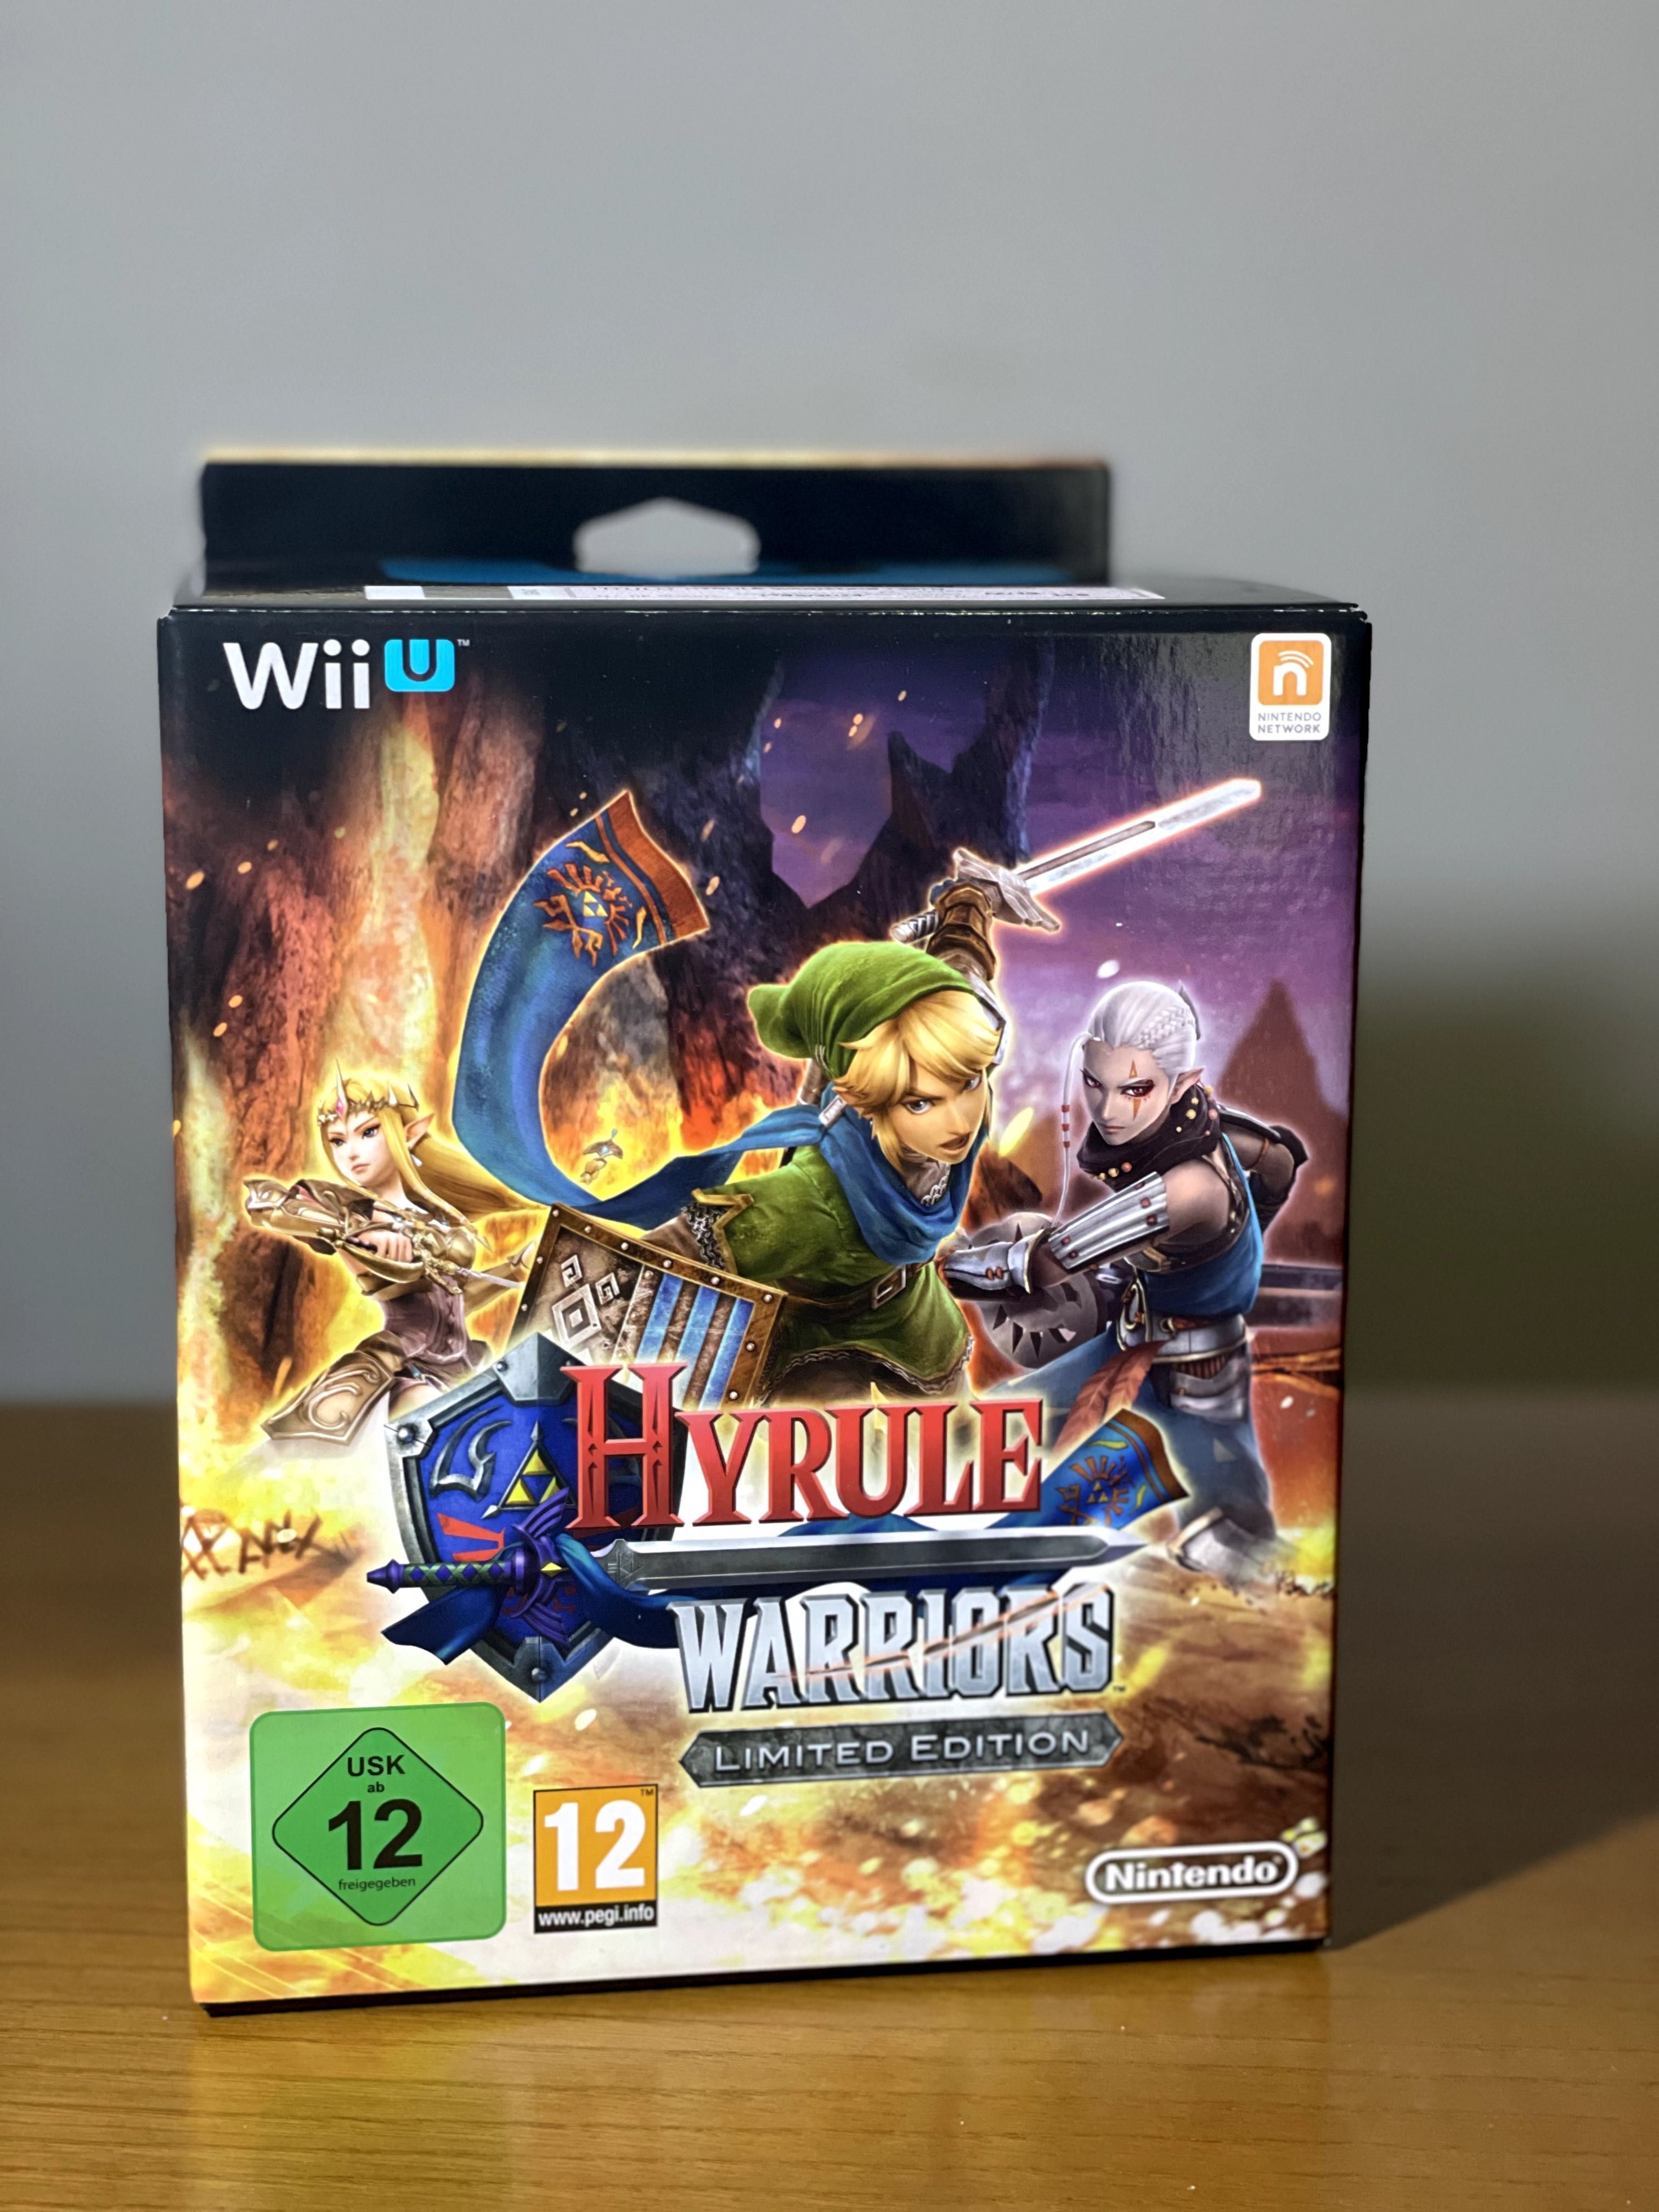 Hyrule Warriors Limited Edition Wii U